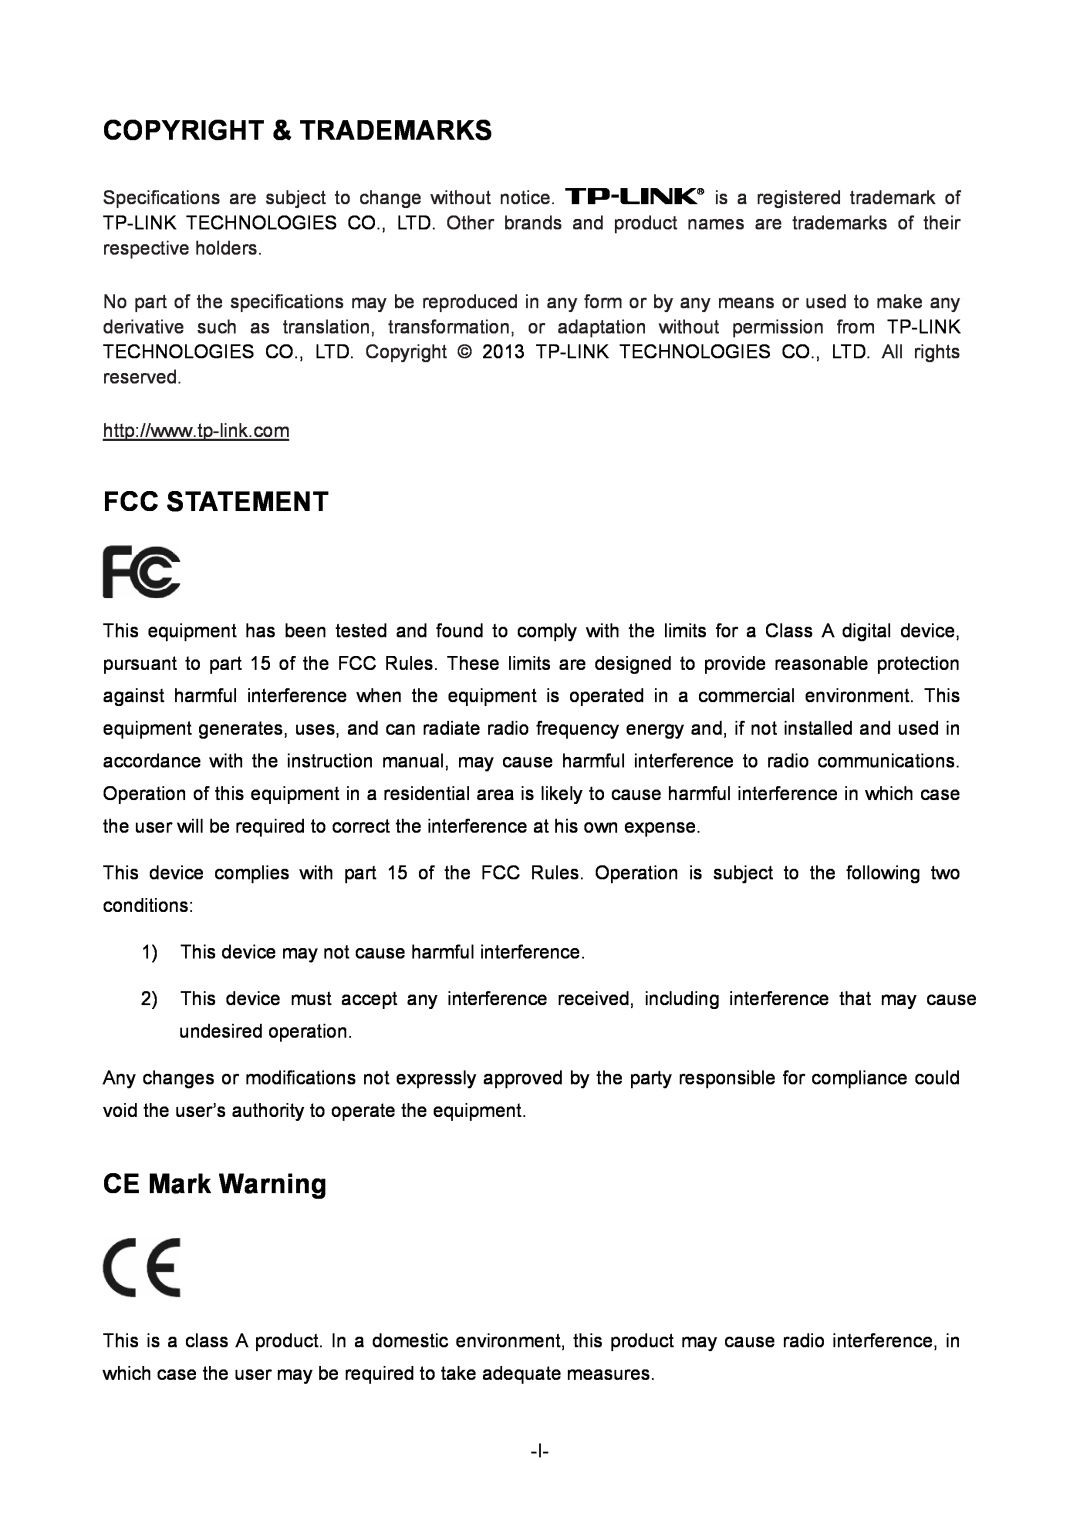 TP-Link 1910010933 manual Copyright & Trademarks, Fcc Statement, CE Mark Warning 